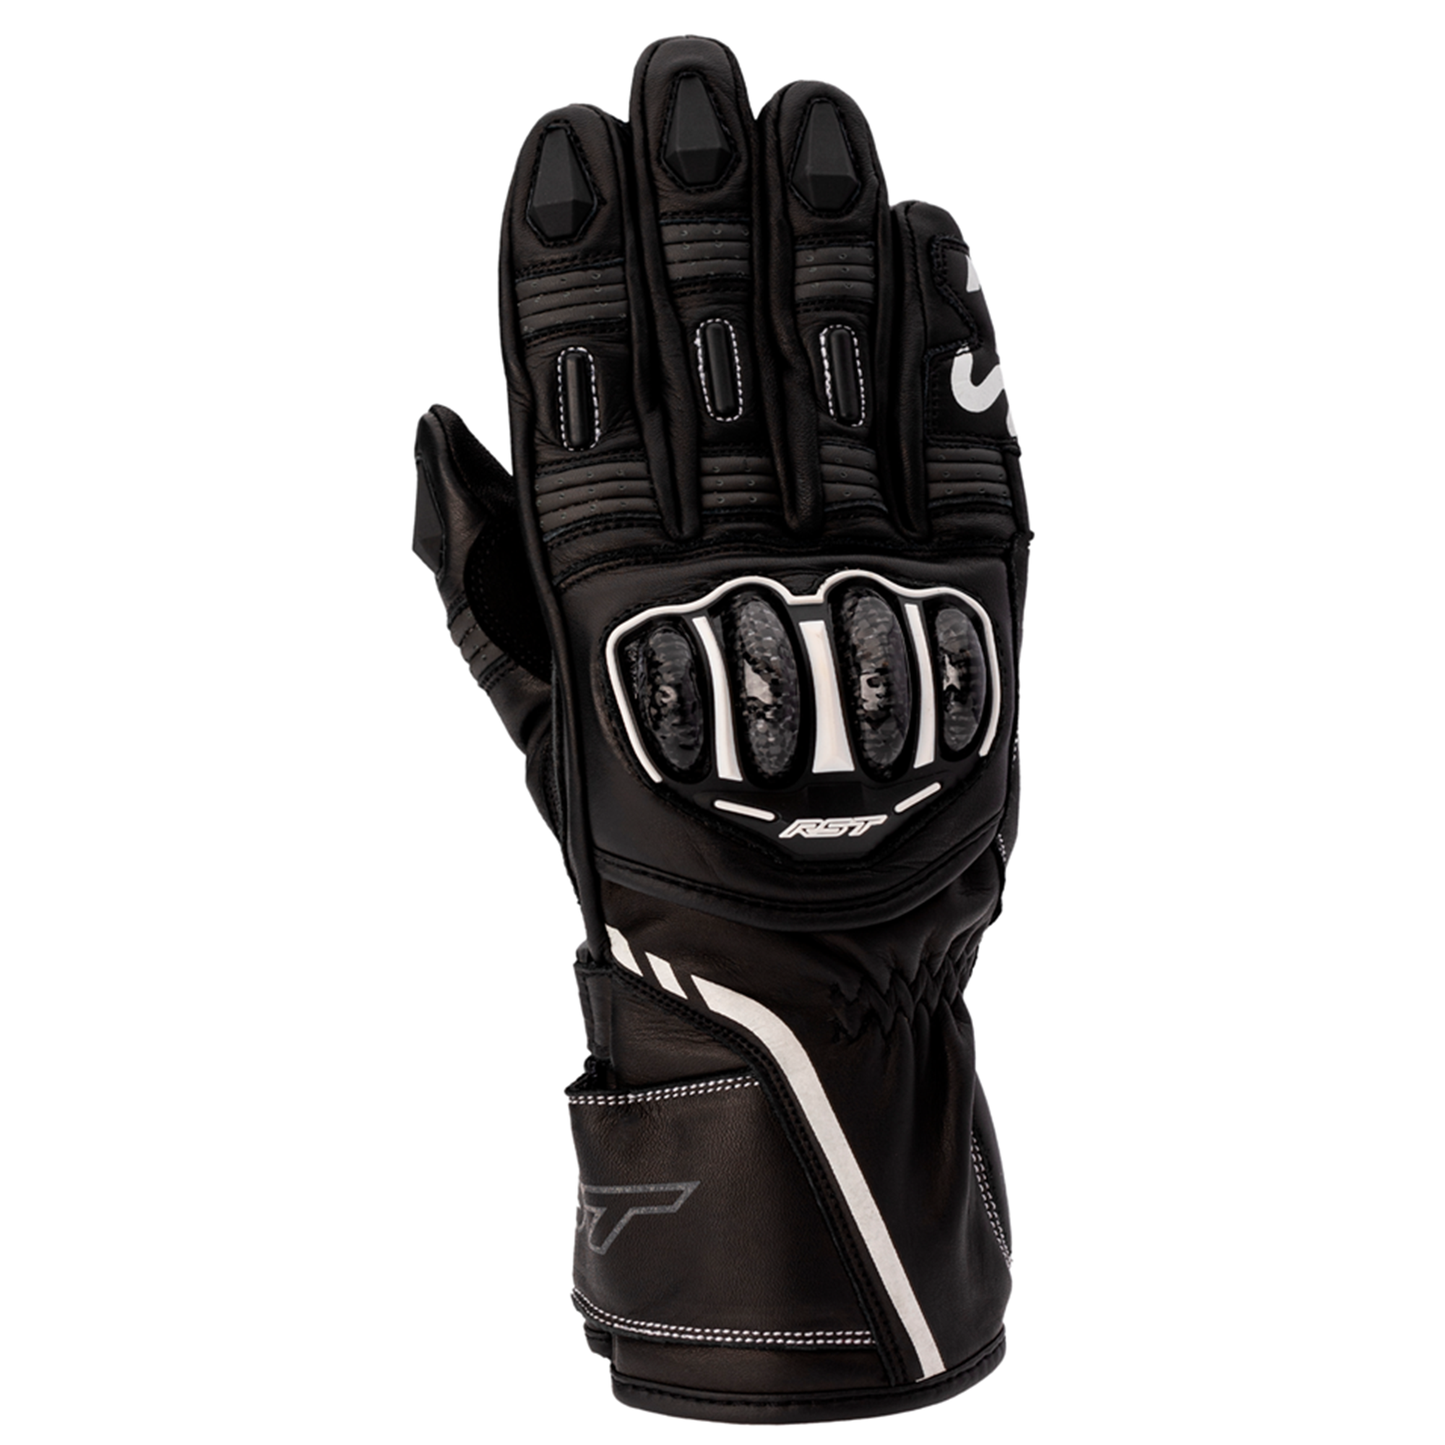 RST S1 CE Ladies Gloves - Black/White (3060)